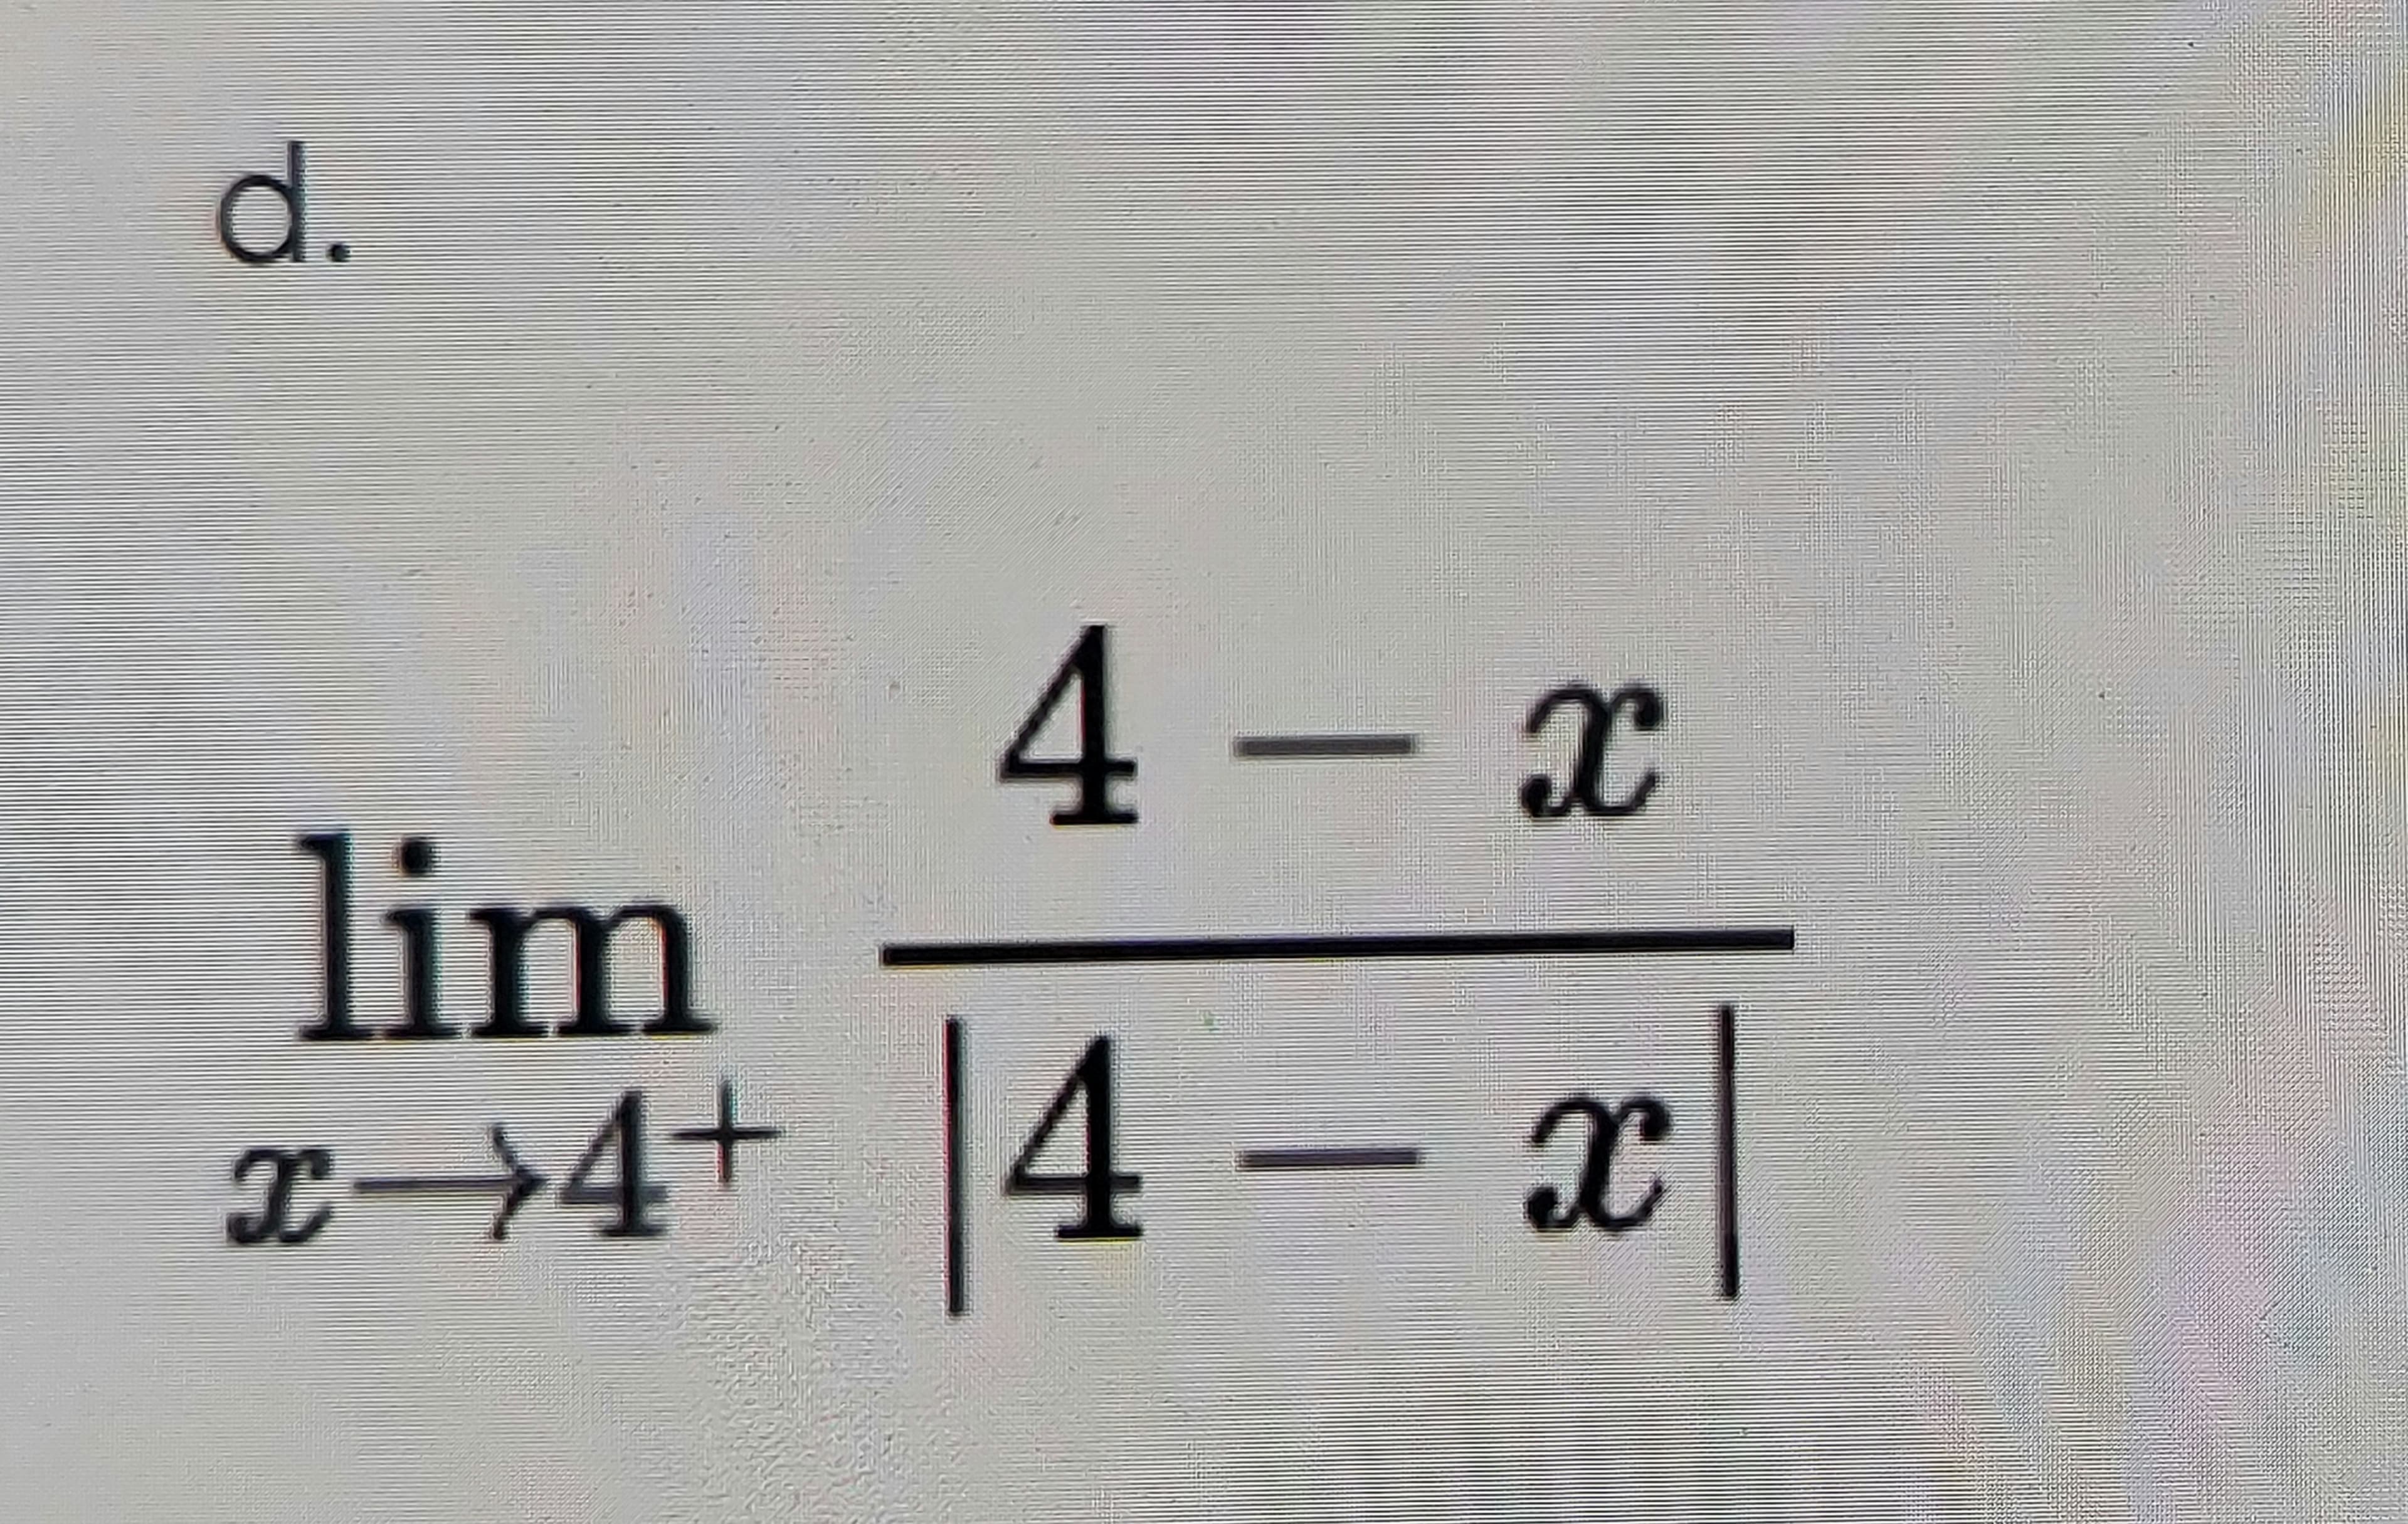 d.
4-x
lim
x→4+ 4 – x
